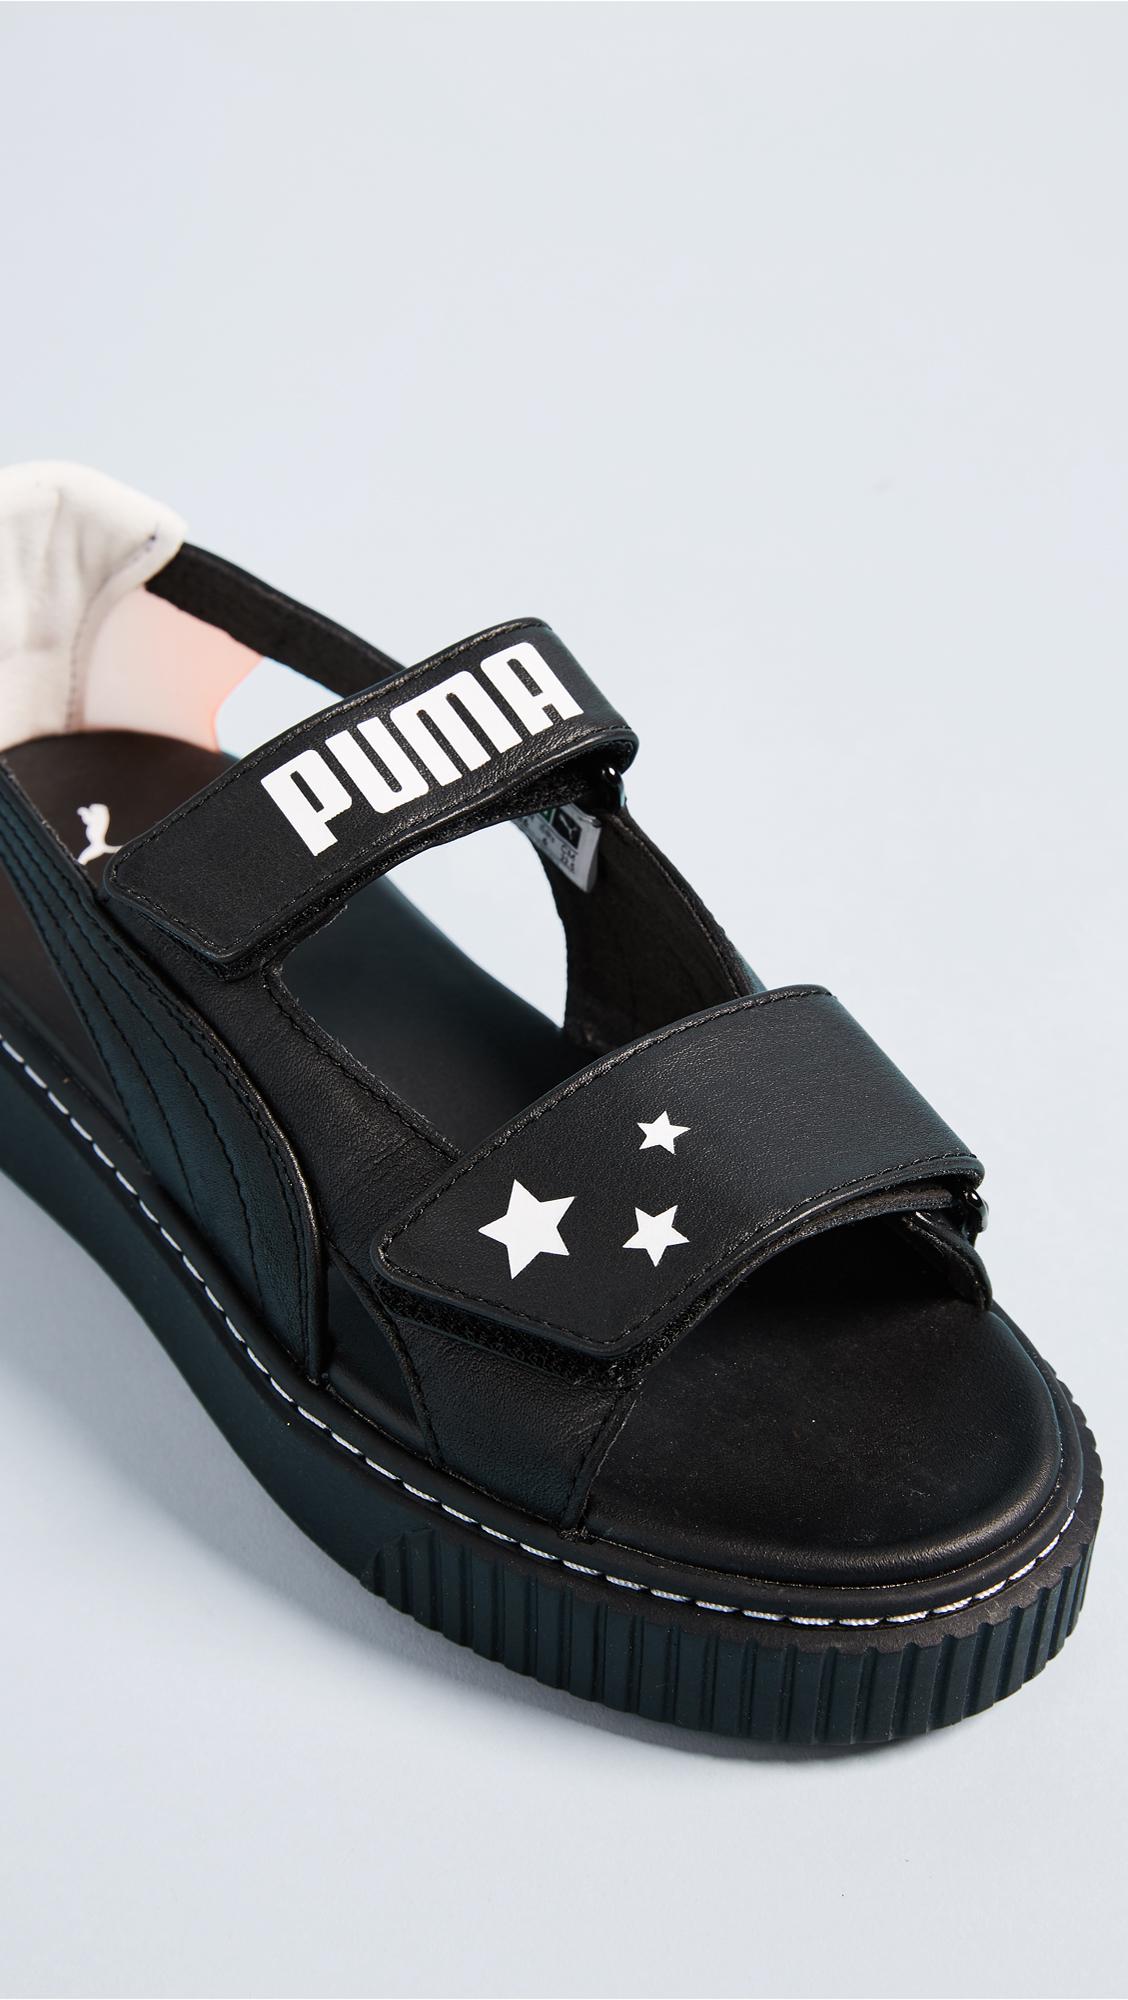 Maxim Paine Gillic Wind PUMA X Sophia Webster Platform Sandals in Black | Lyst